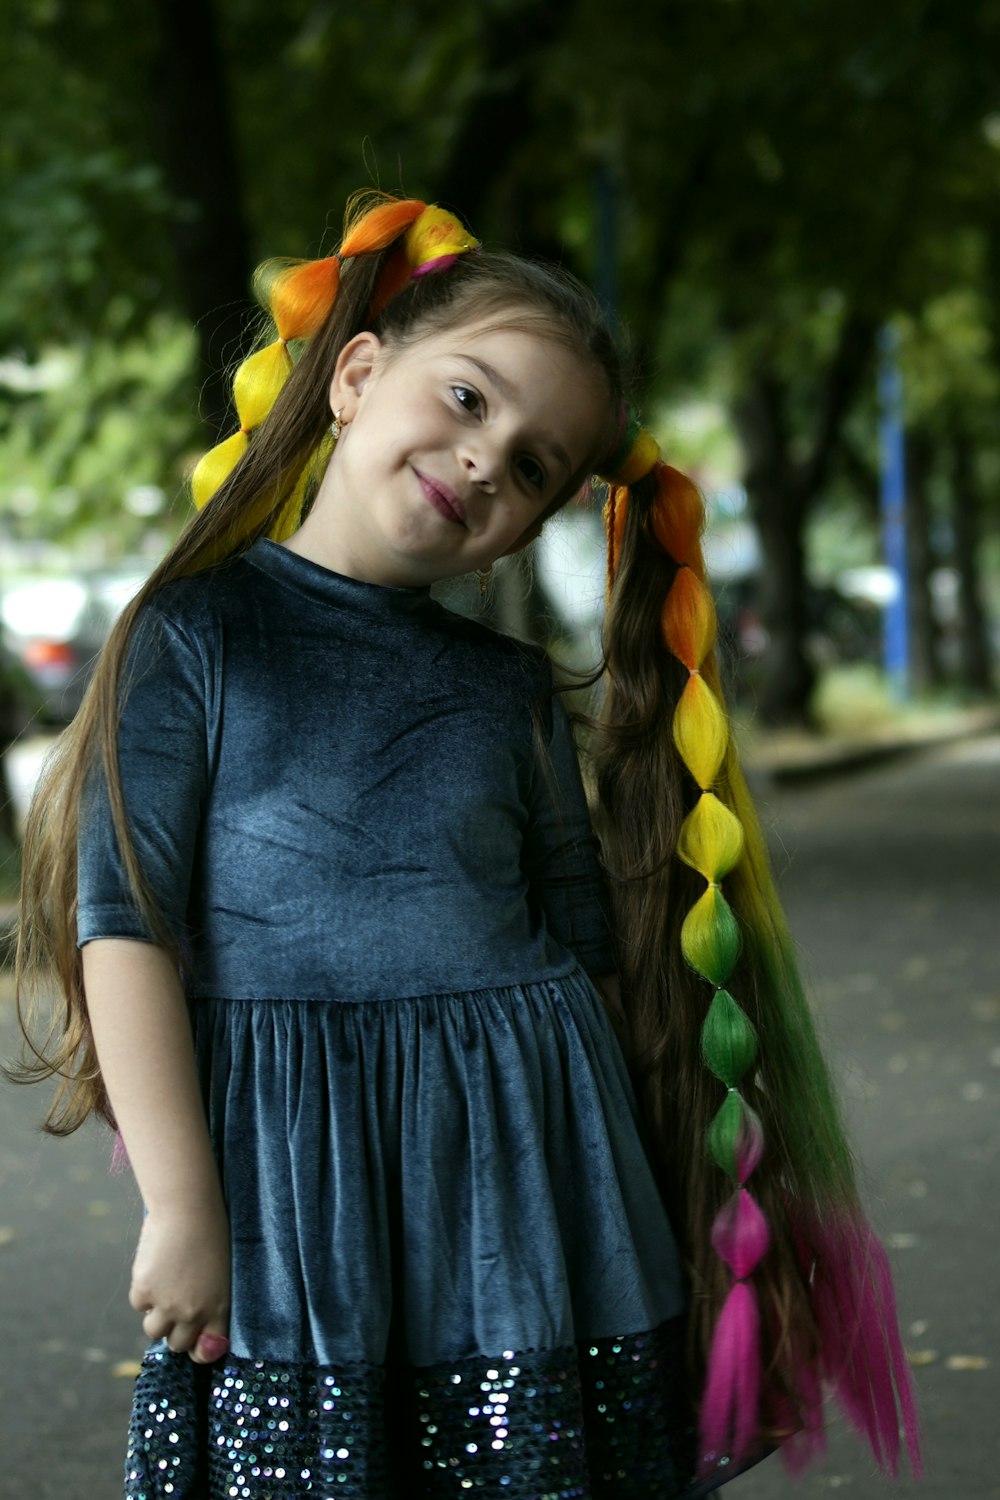 a little girl with long hair wearing a blue dress